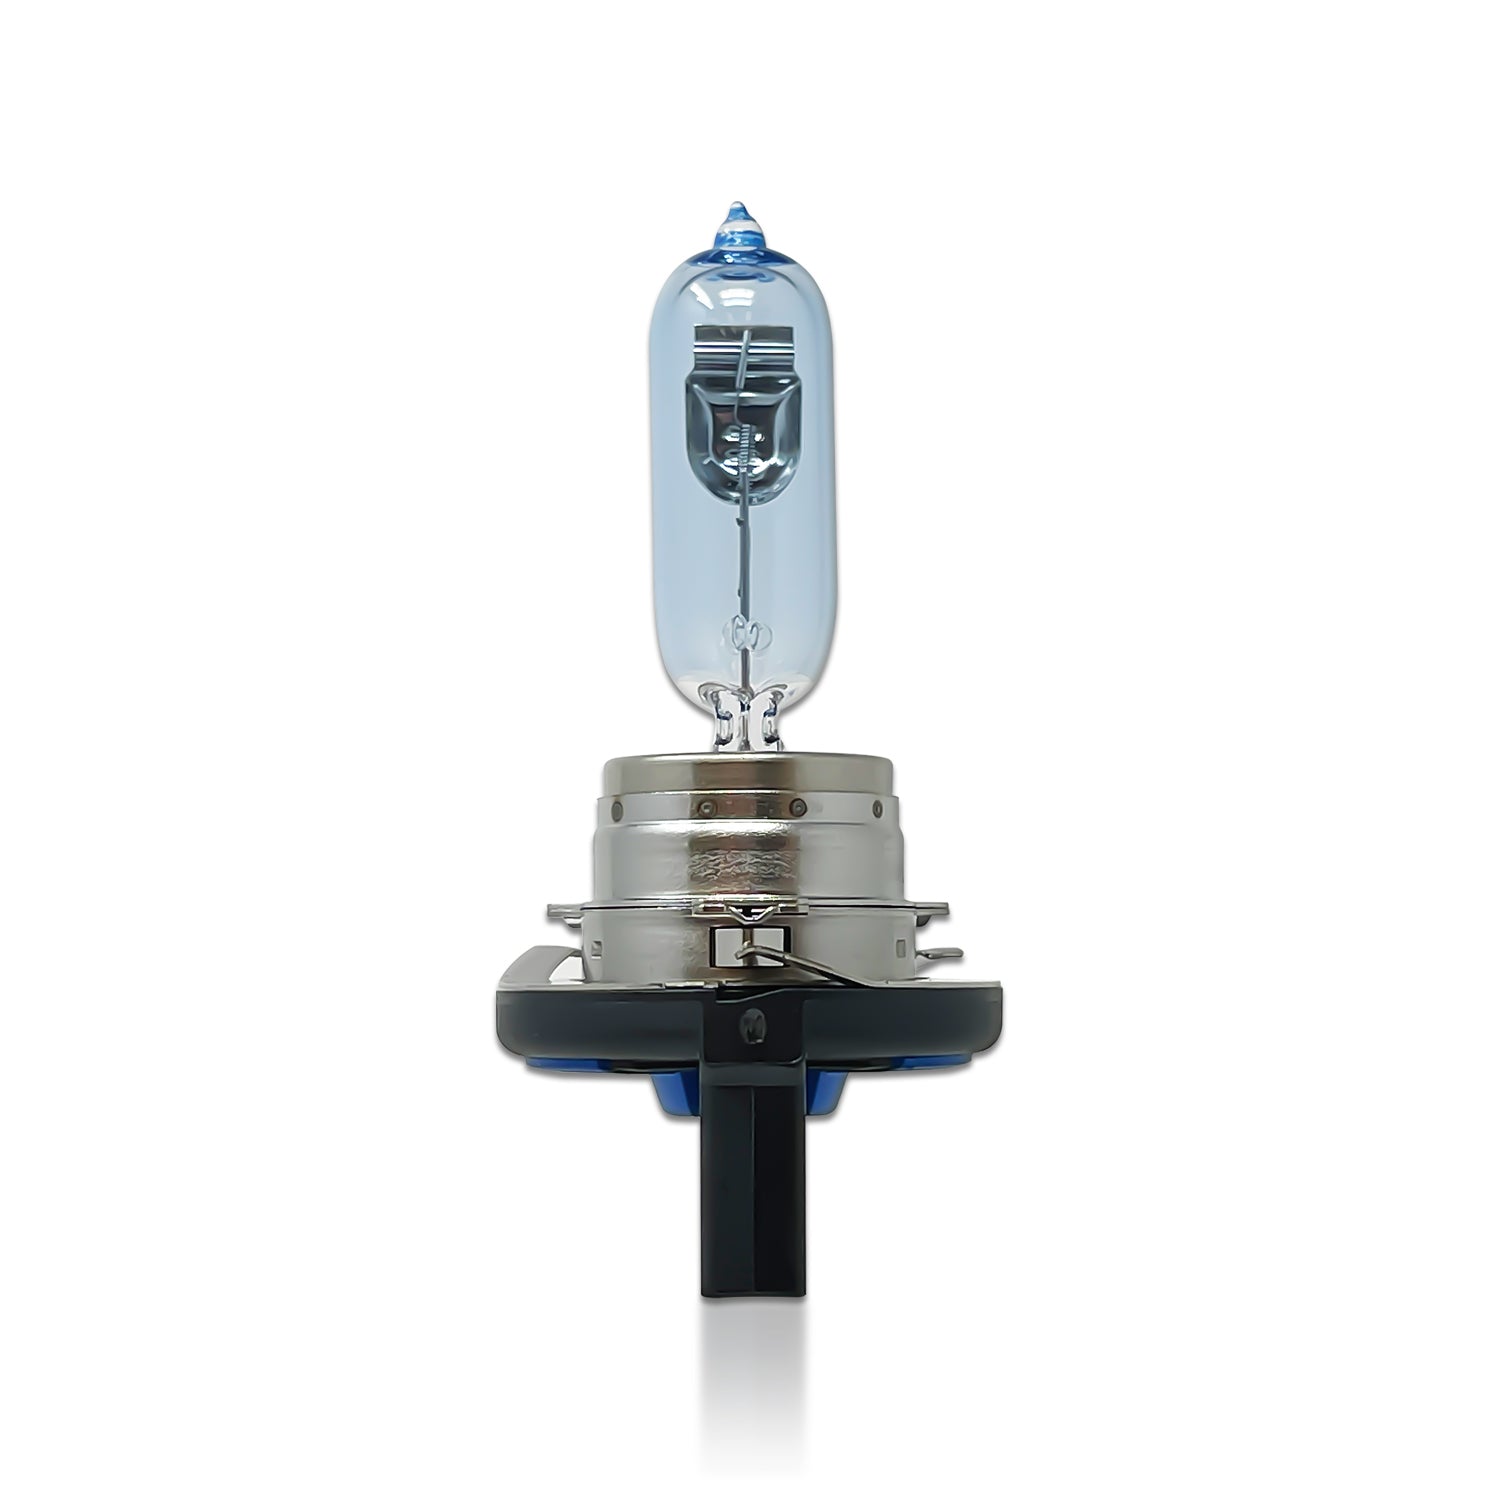 Osram H15 Cool Blue Intense Halogen 55/15W Bulb 3700K (Single)